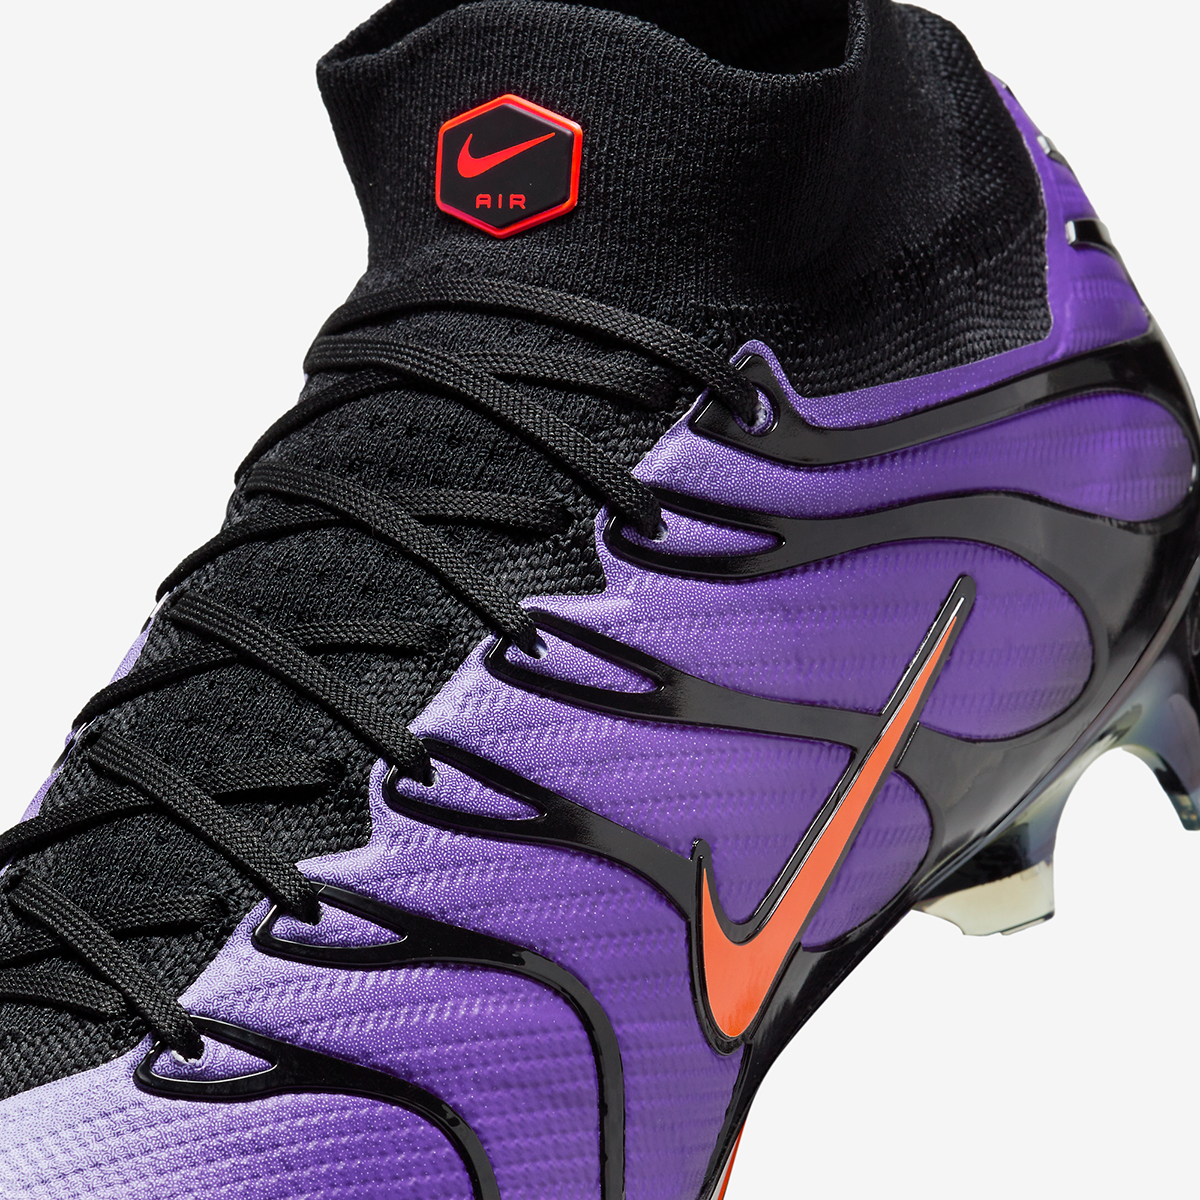 Nike Mercurial Tn Football Boots Voltage Purple Fv4553 500 1